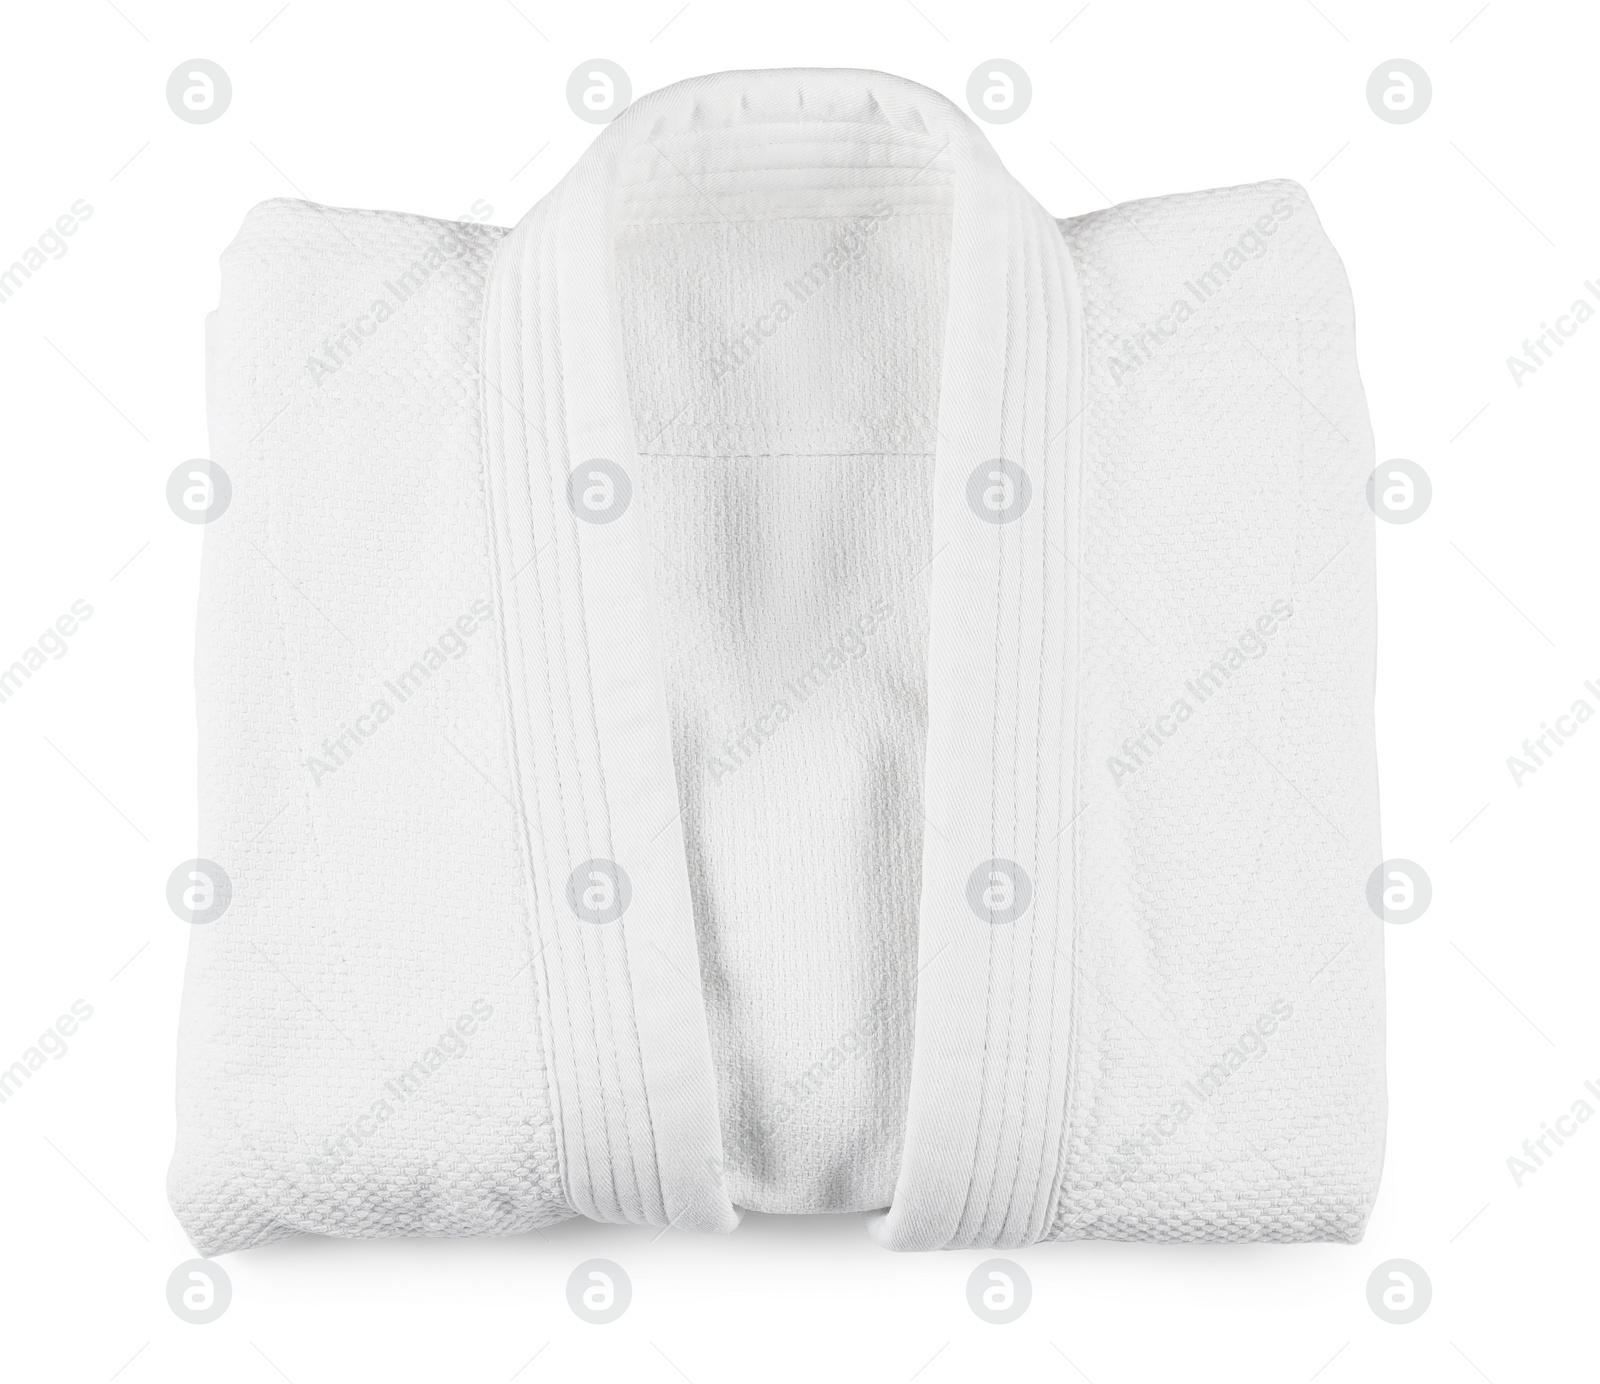 Photo of Folded kimono isolated on white, top view. Martial arts uniform